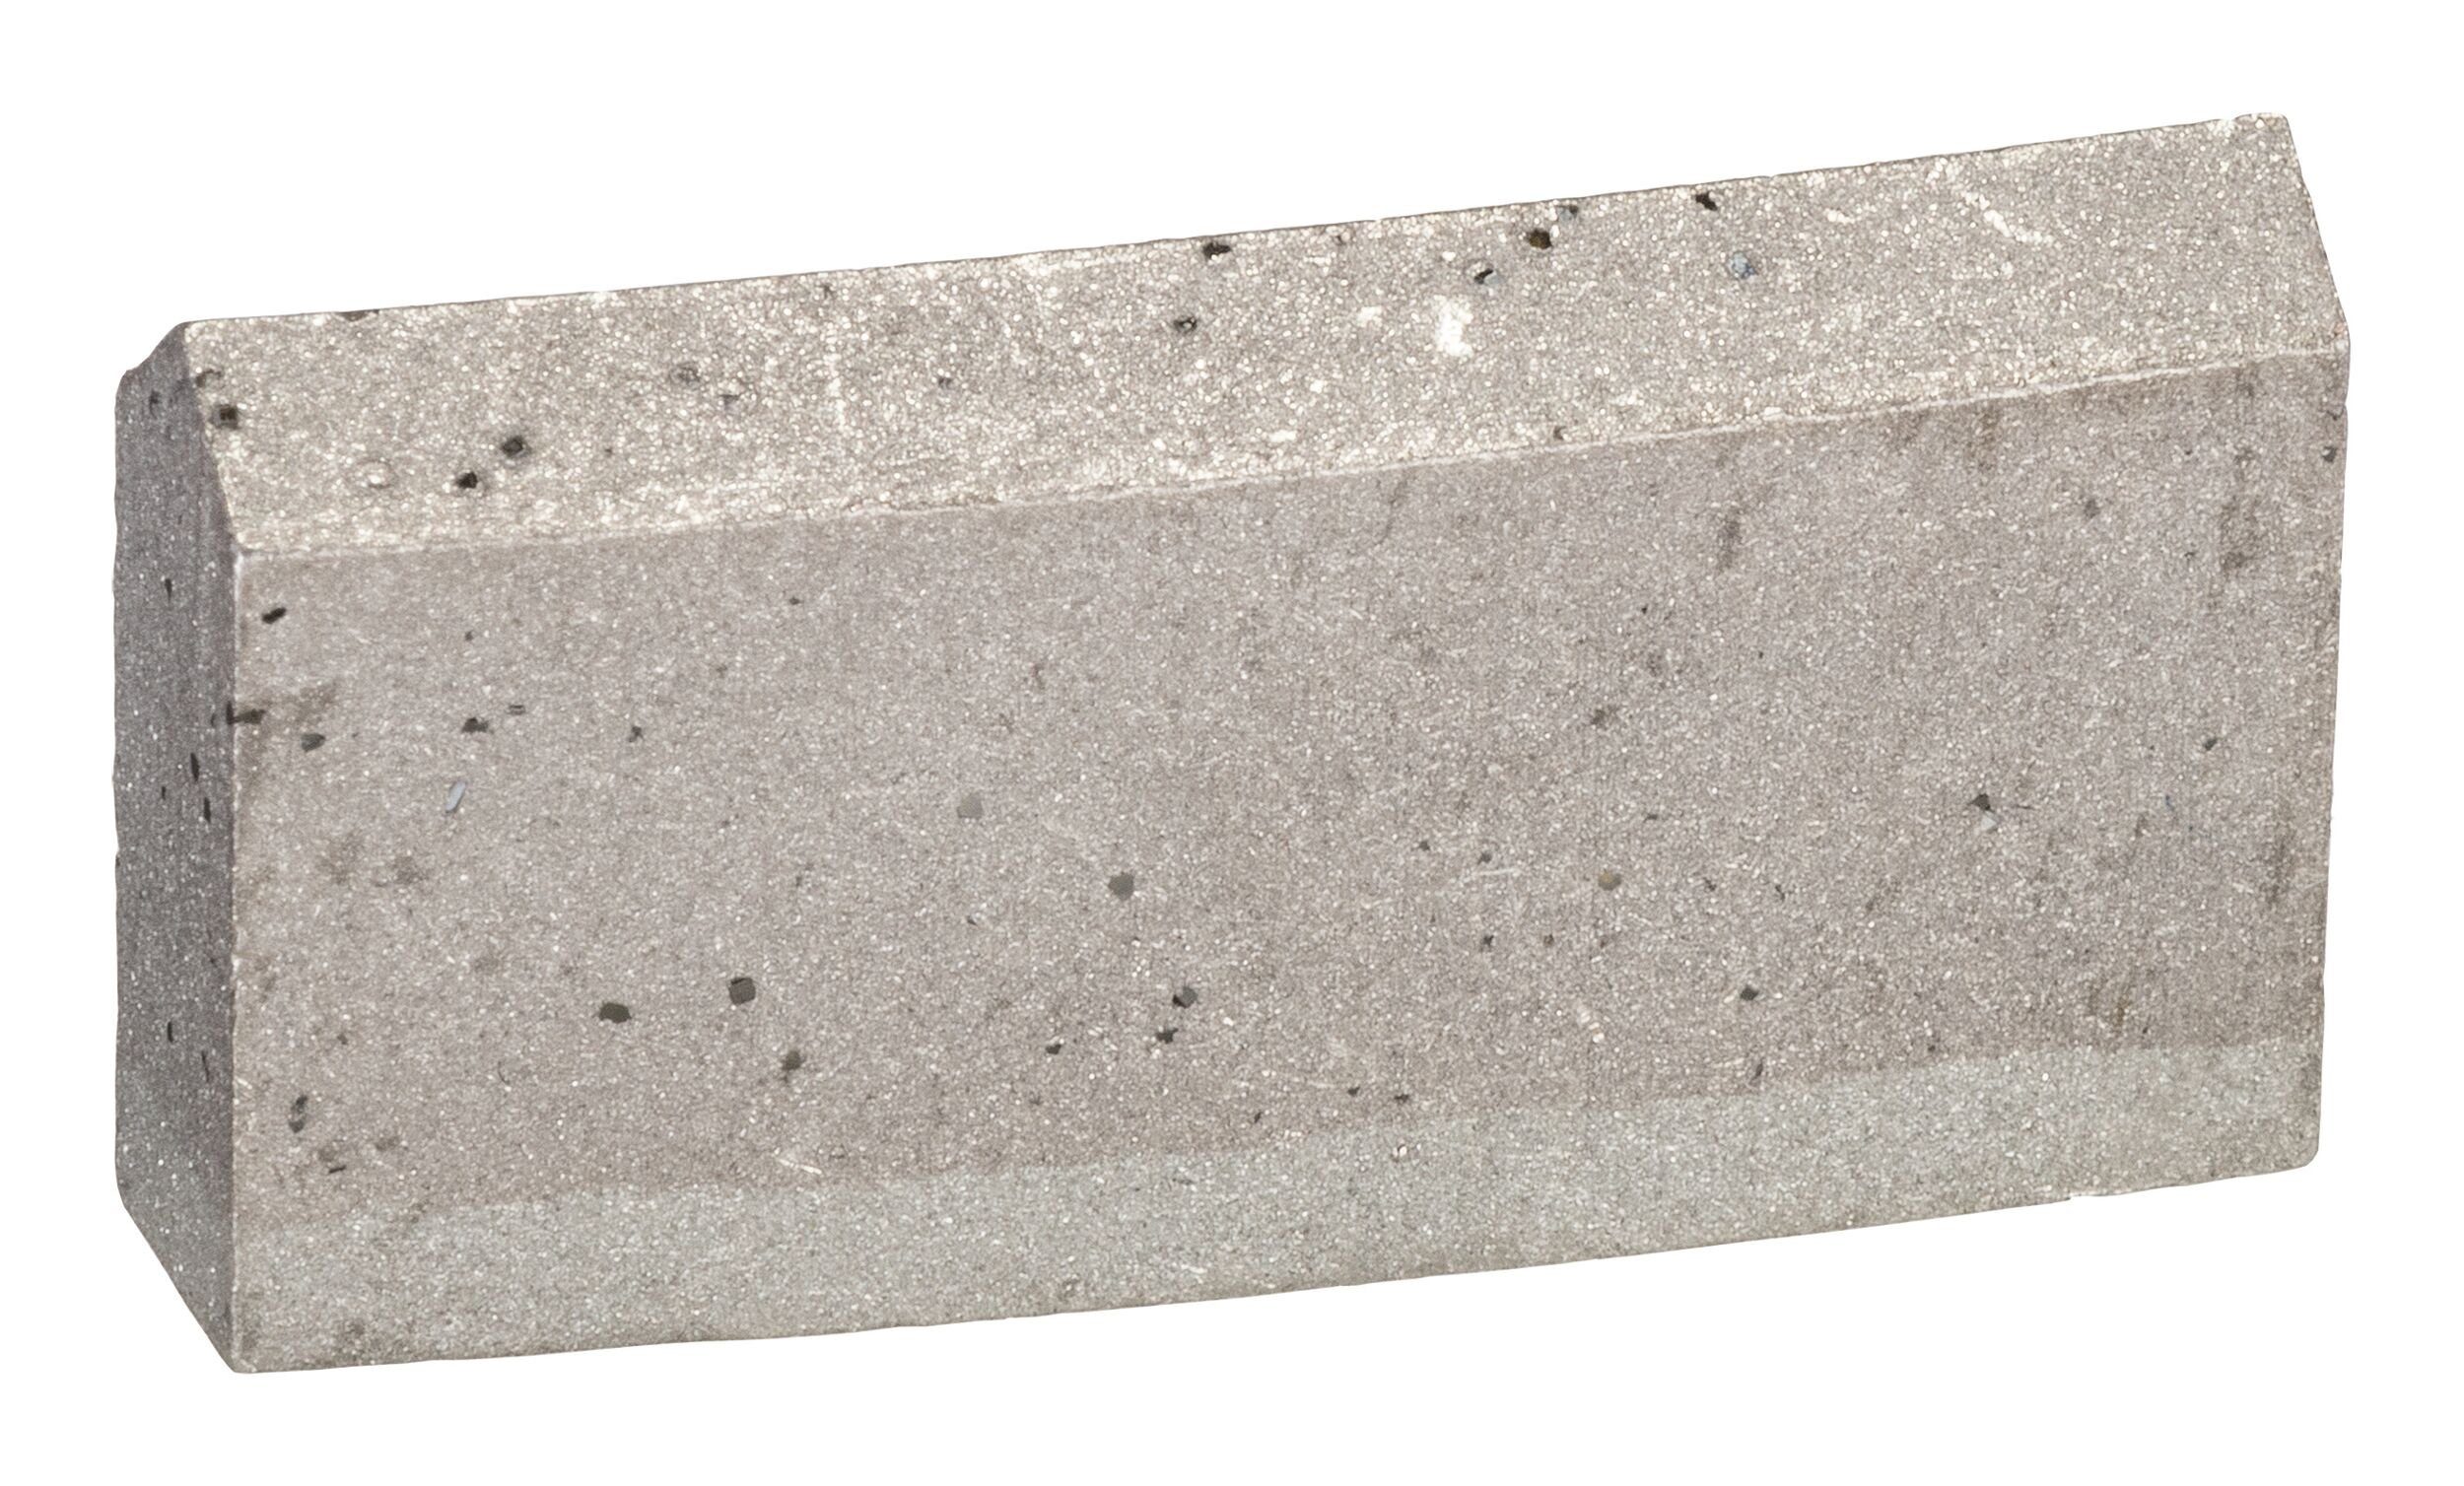 Concrete Segmente 17 1/4" Diamantbohrkronen Bohrkrone, Best for BOSCH f. UNC 1